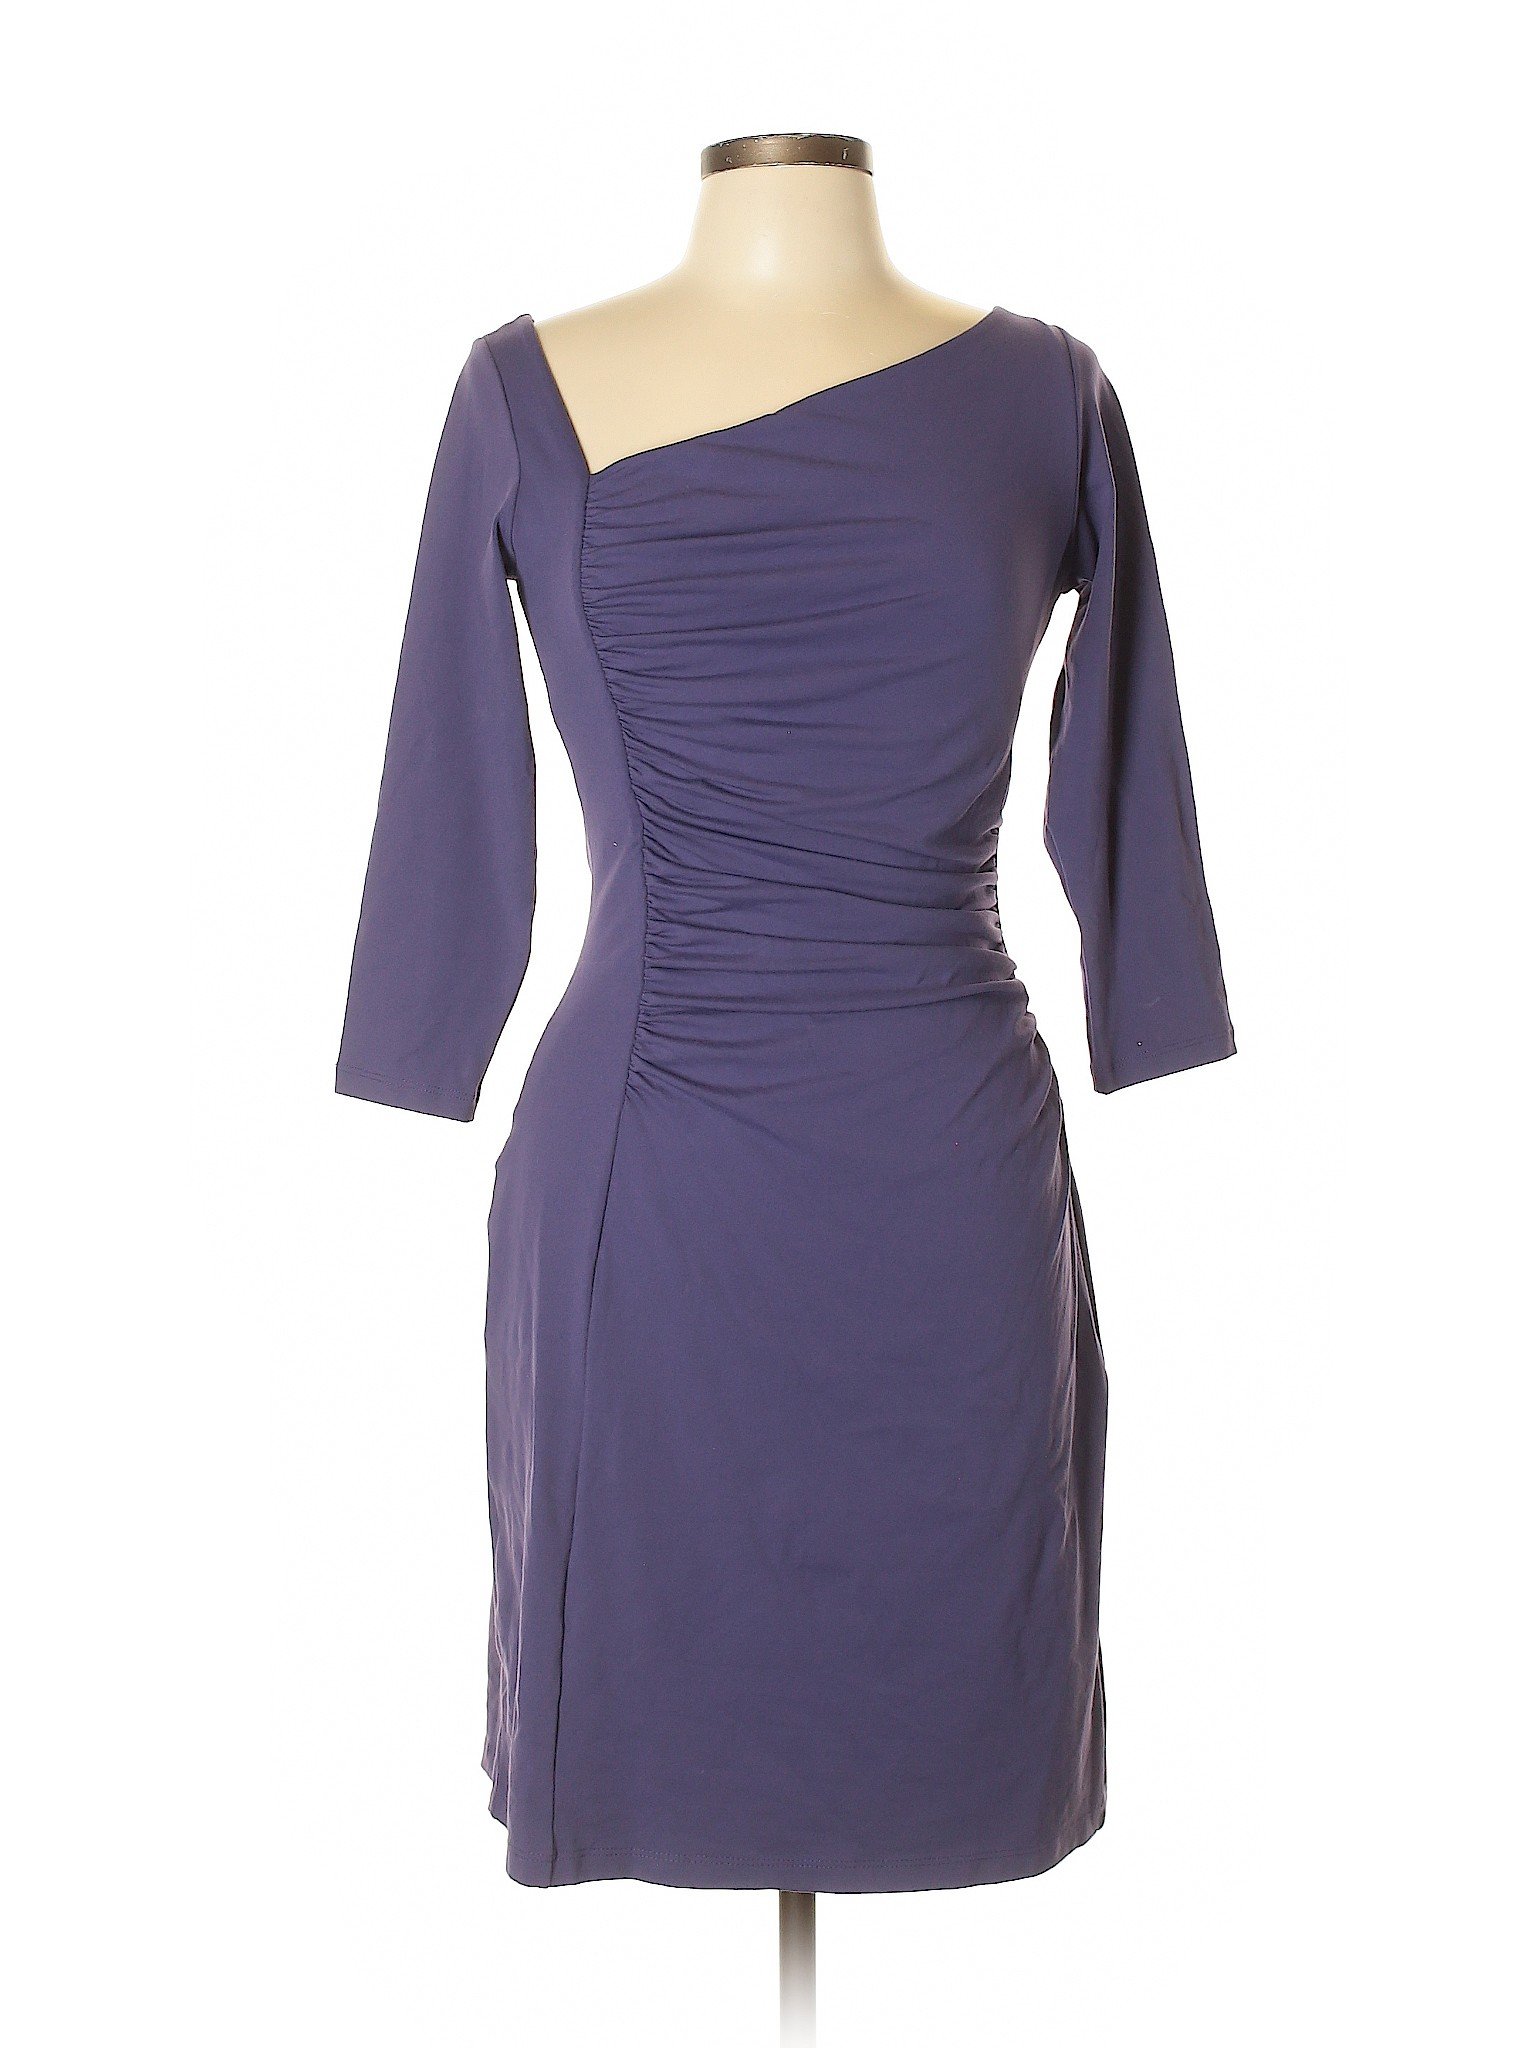 Susana Monaco Solid Purple Casual Dress Size L - 83% off | thredUP